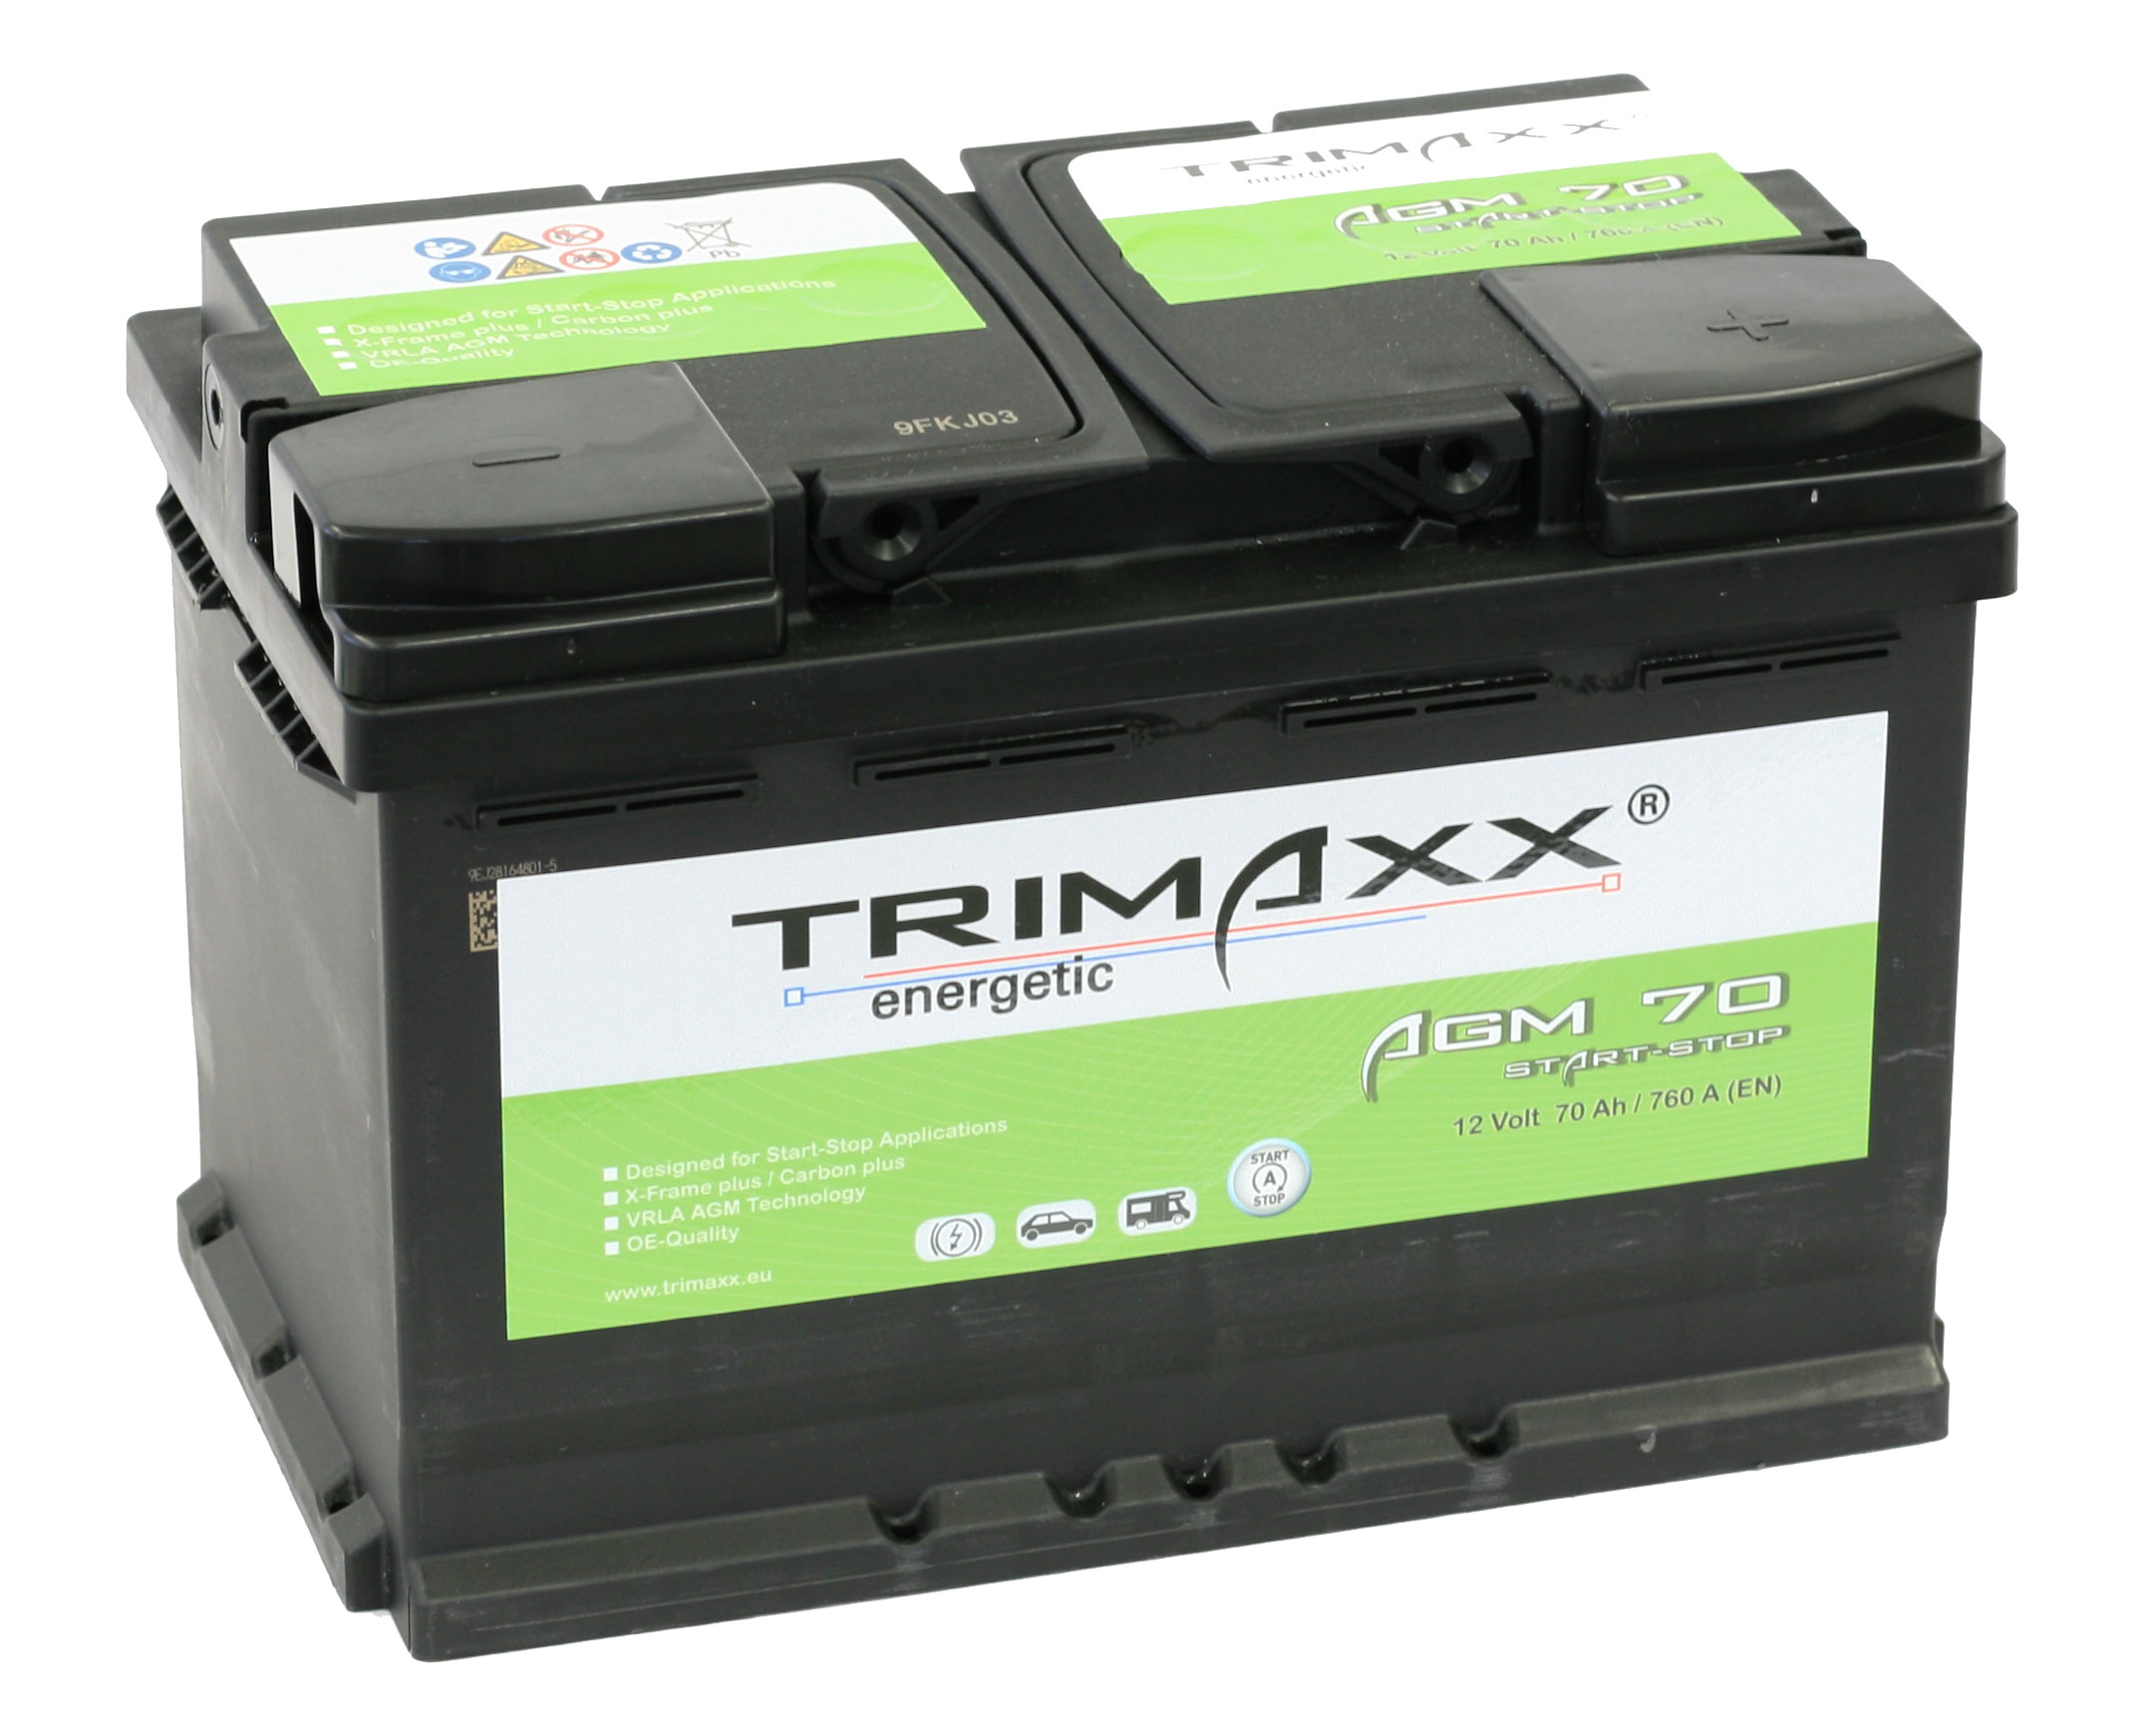 Trimaxx Professional Star-Stop AGM, 70Ah, 760A